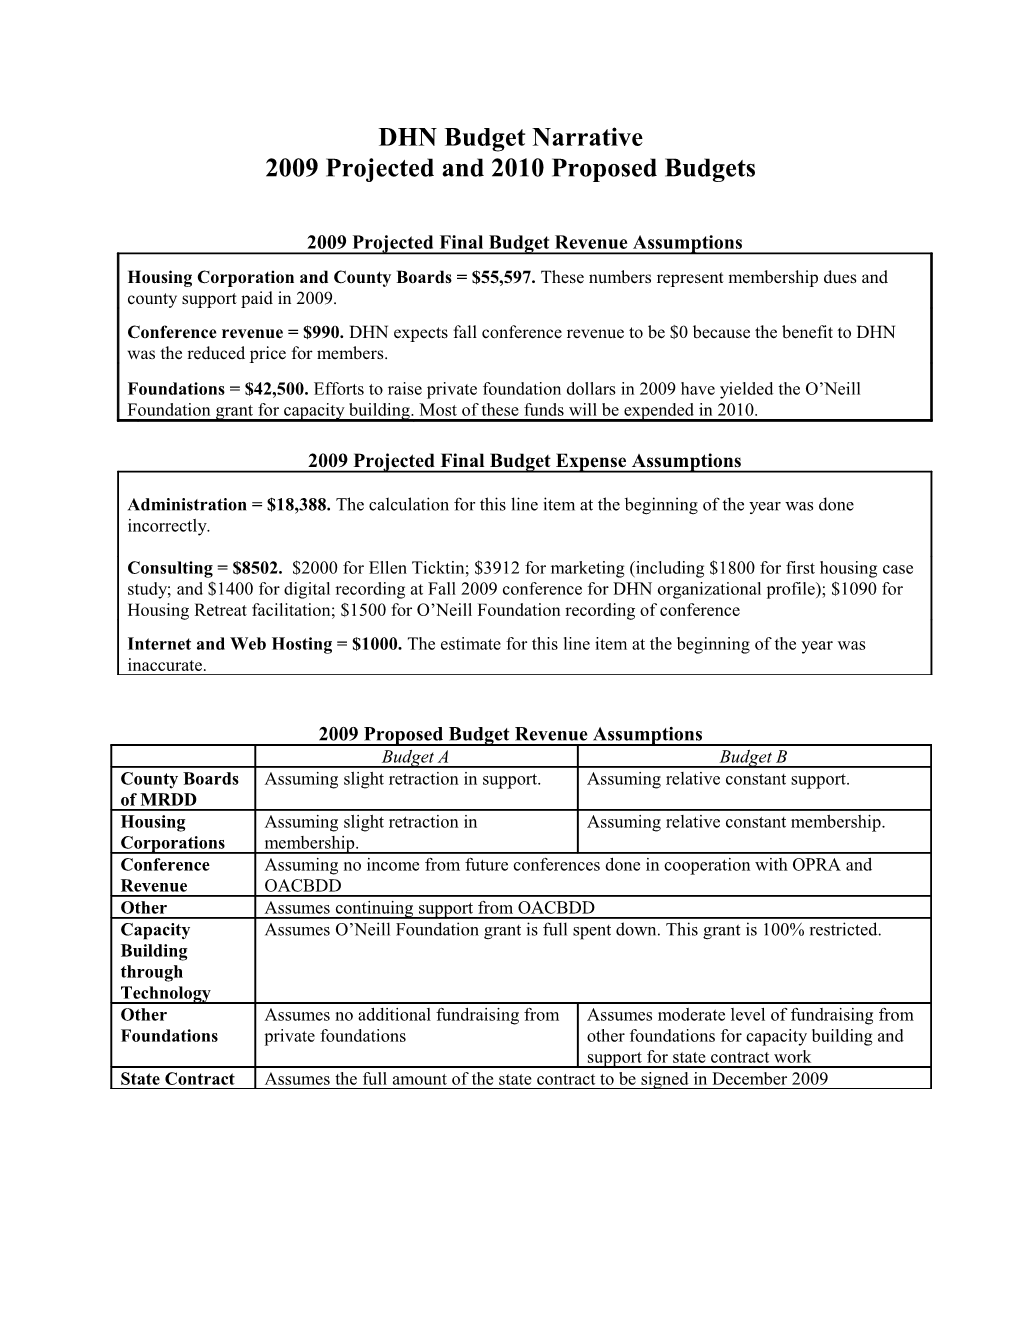 2008 Projected Final Budget Revenue Assumptions